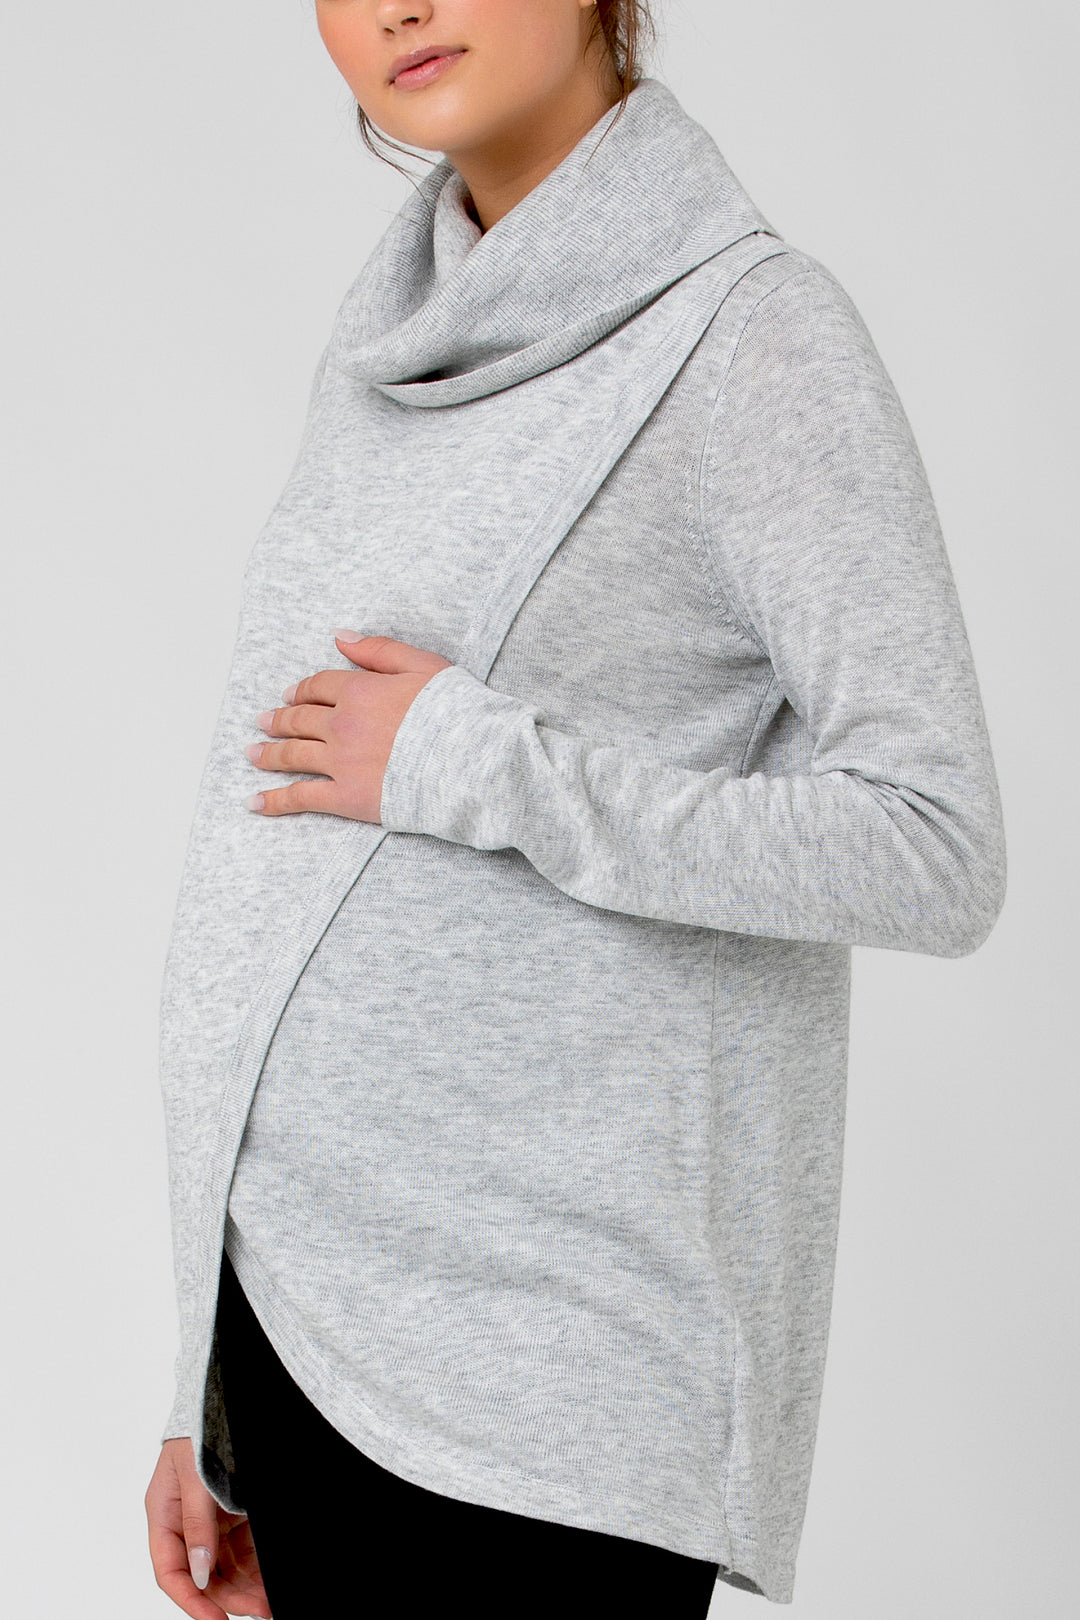 Cowl Neck Maternity Nursing Knit in Heather Grey